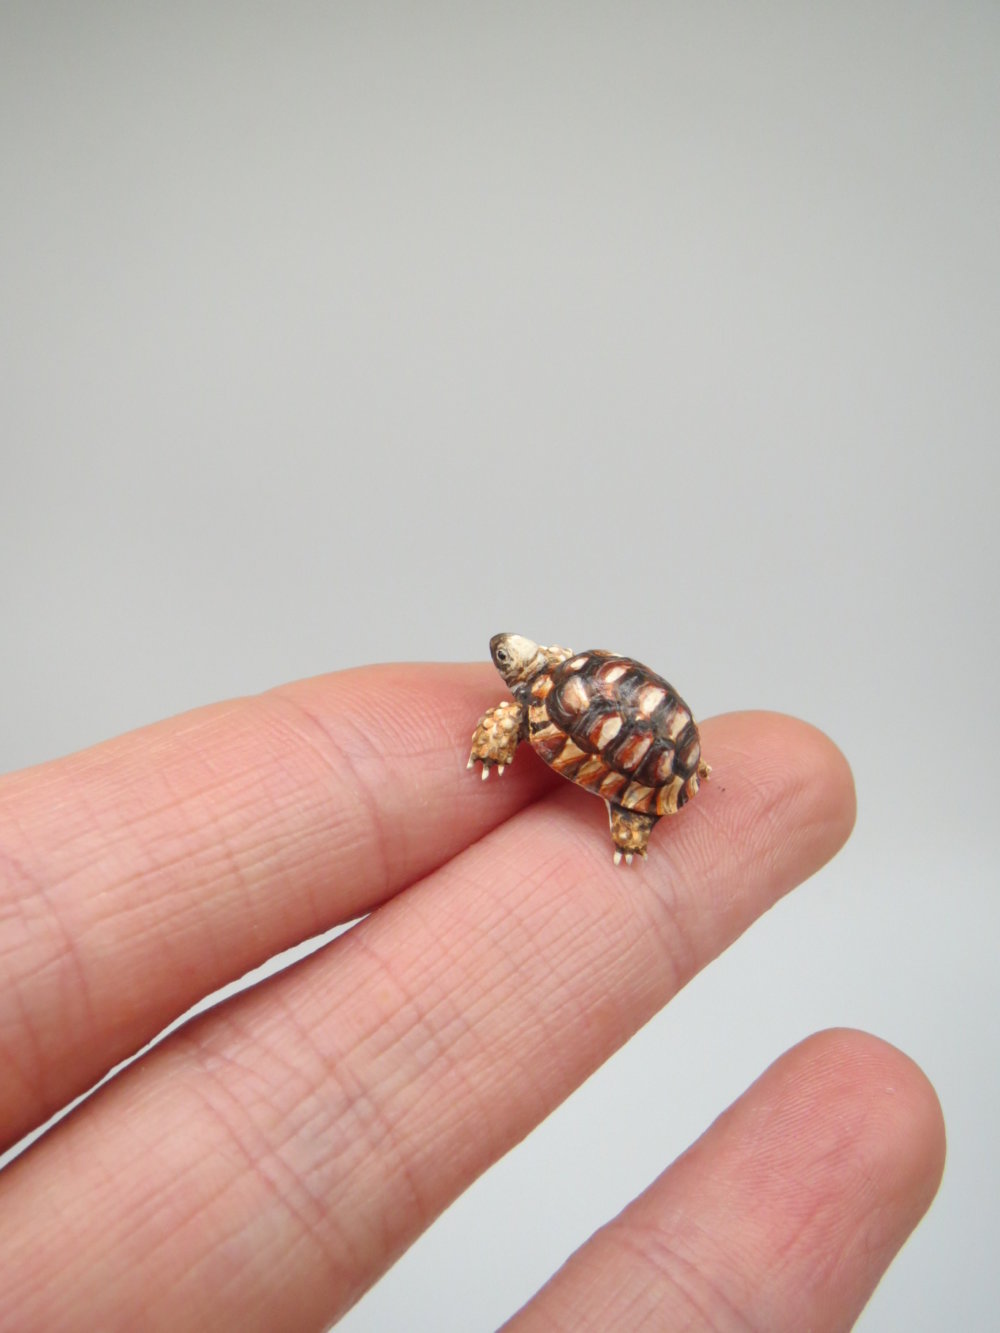 Hyper Accurate Miniature Animals By Fanni Sandor 11